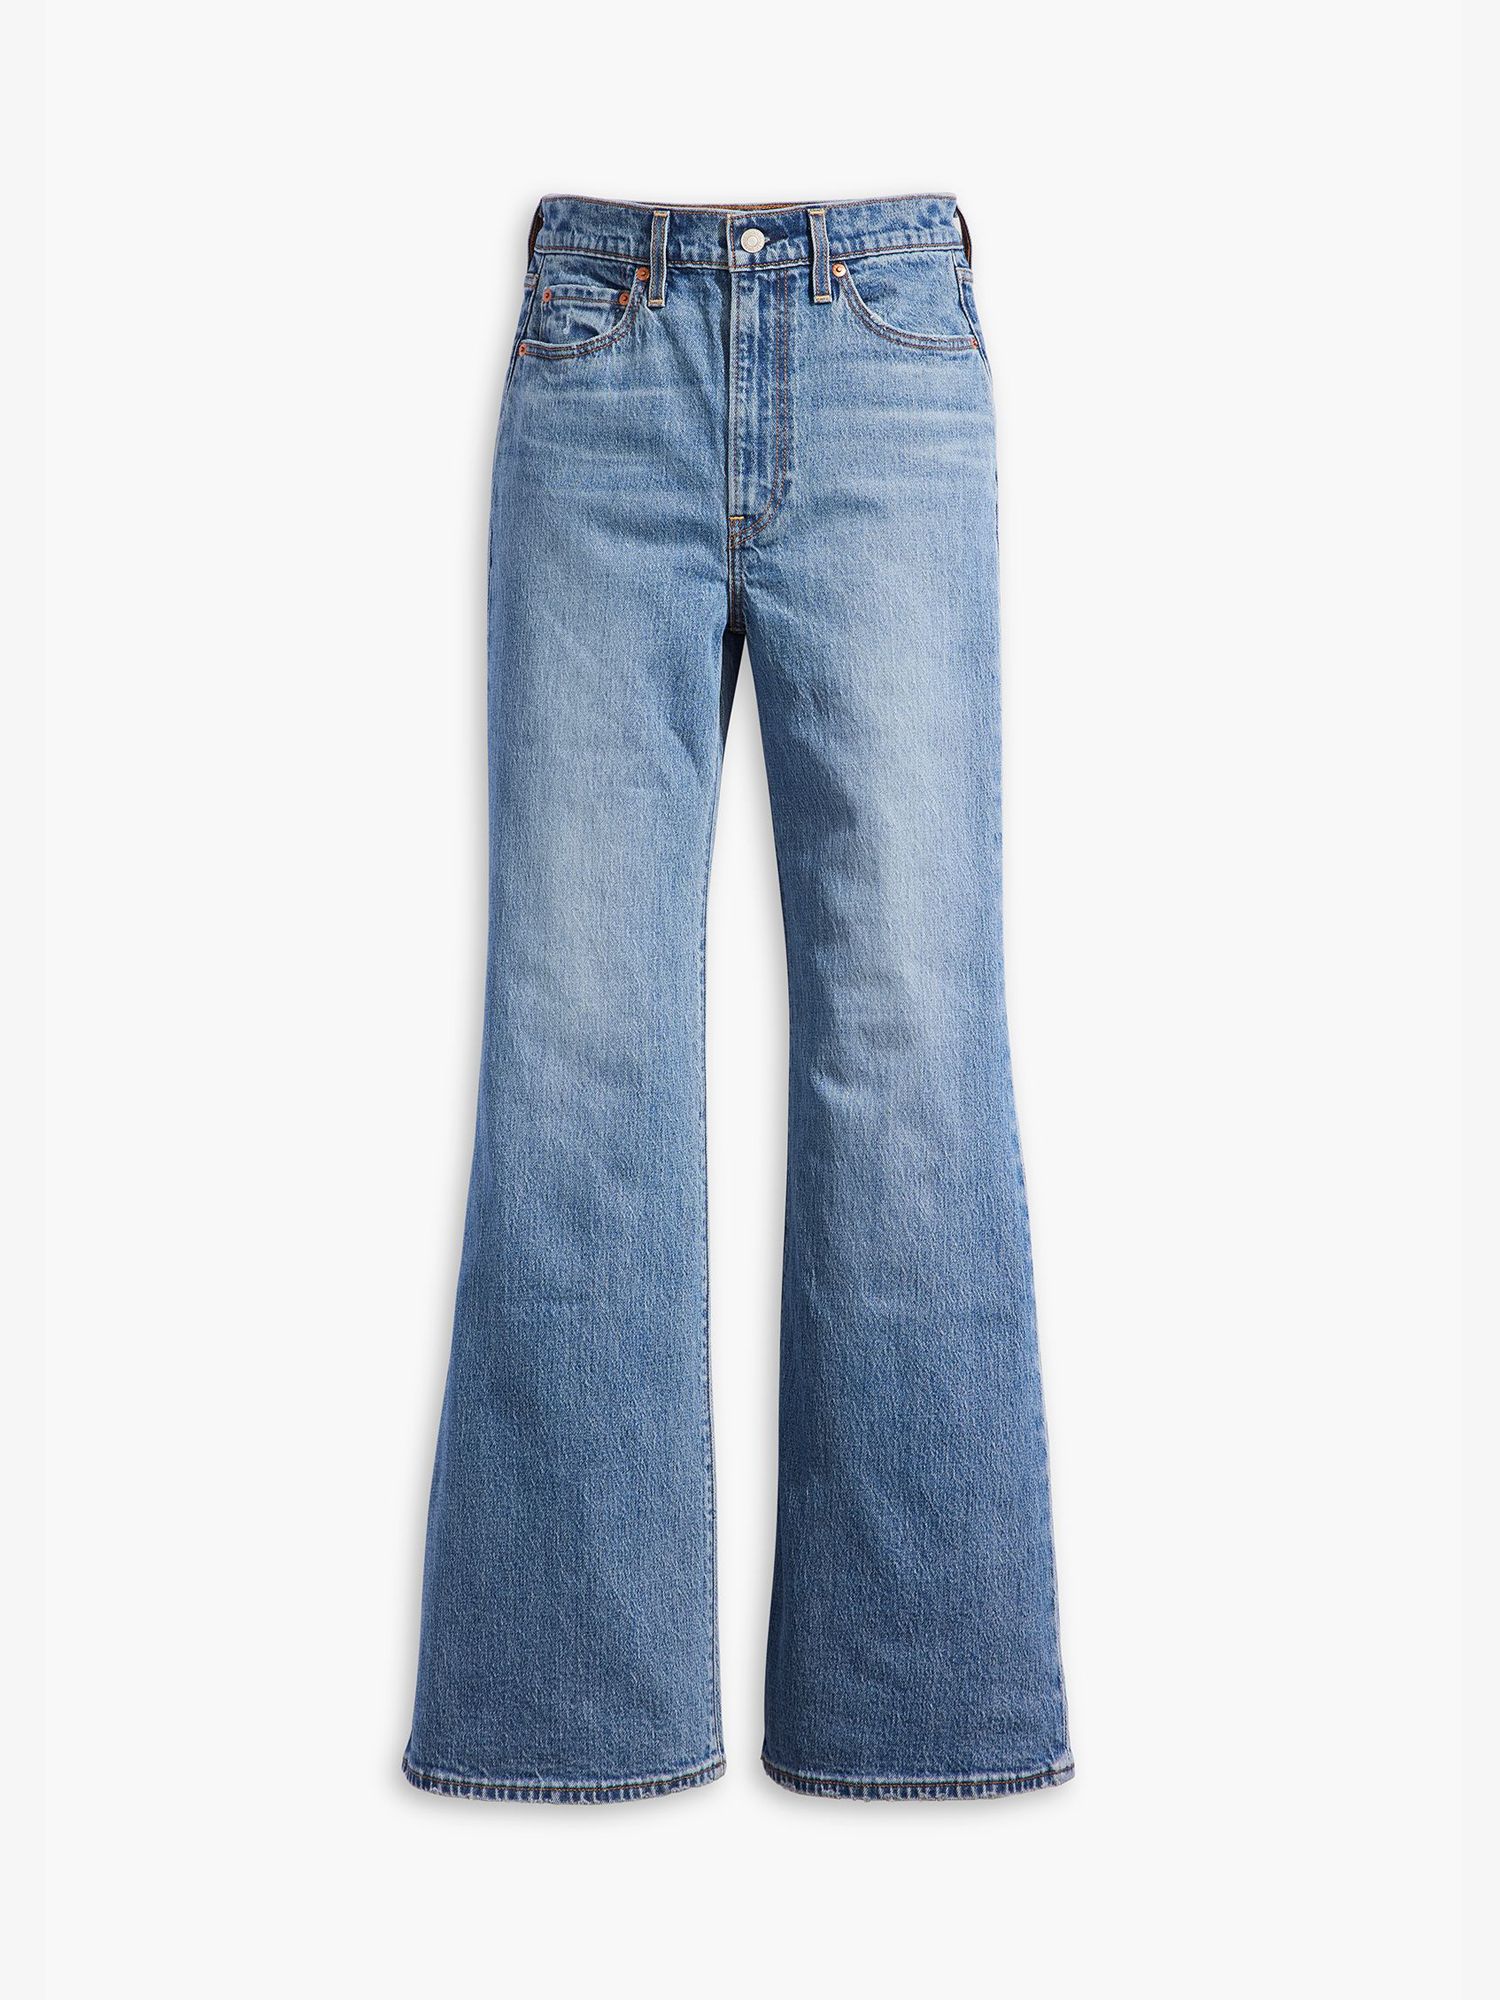 Levi's® Ribcage High Rise Distressed Flare Jeans | Dillard's